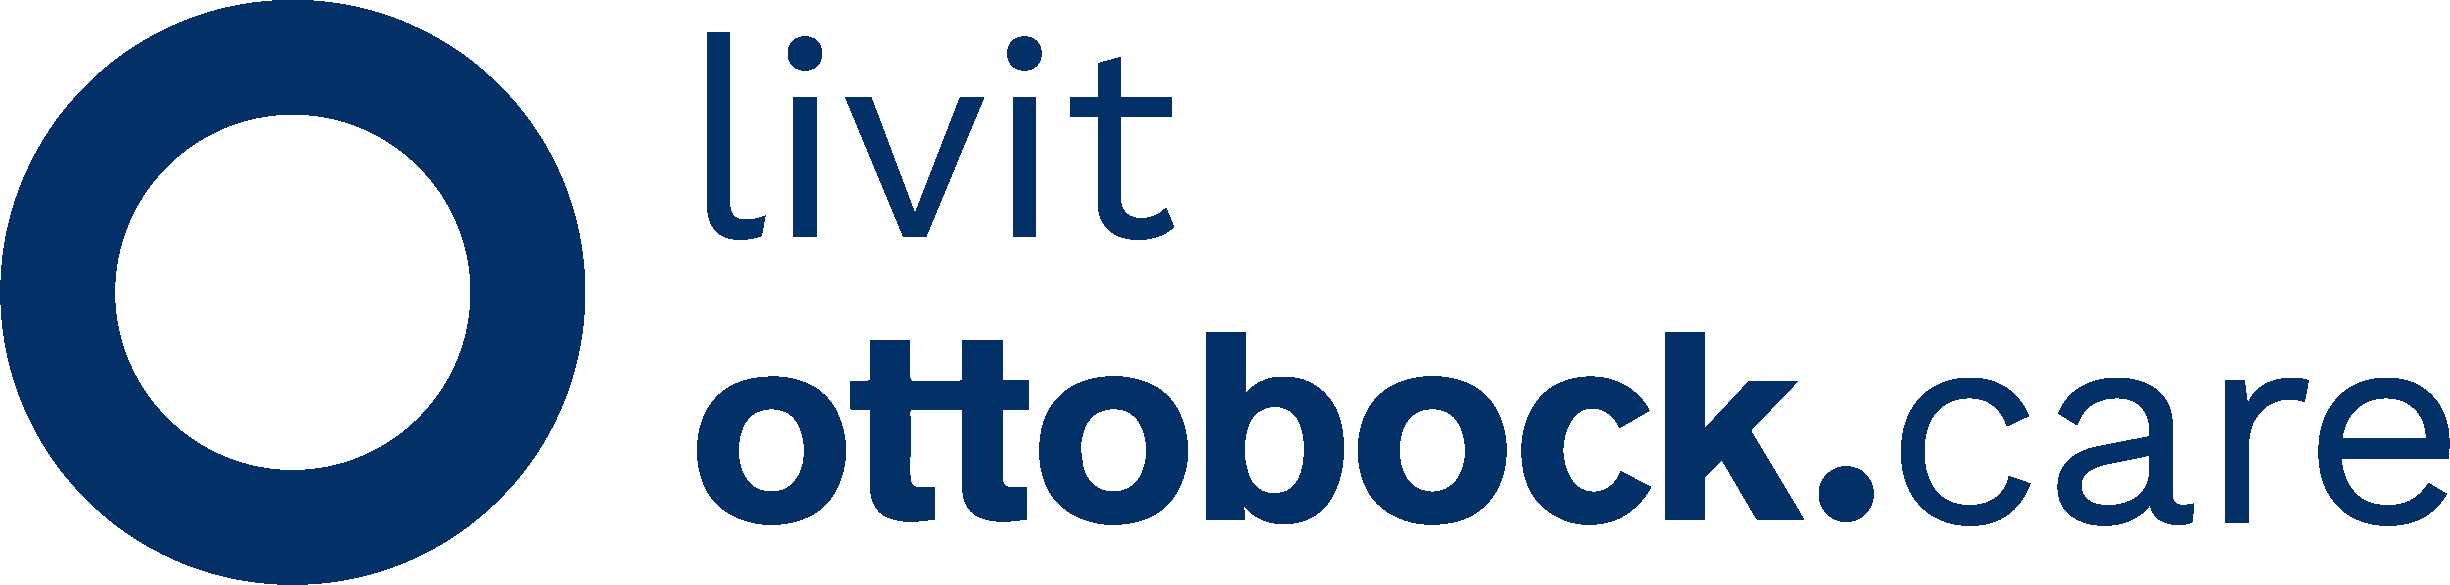 Livit nieuwe logo - Livit ottobock care